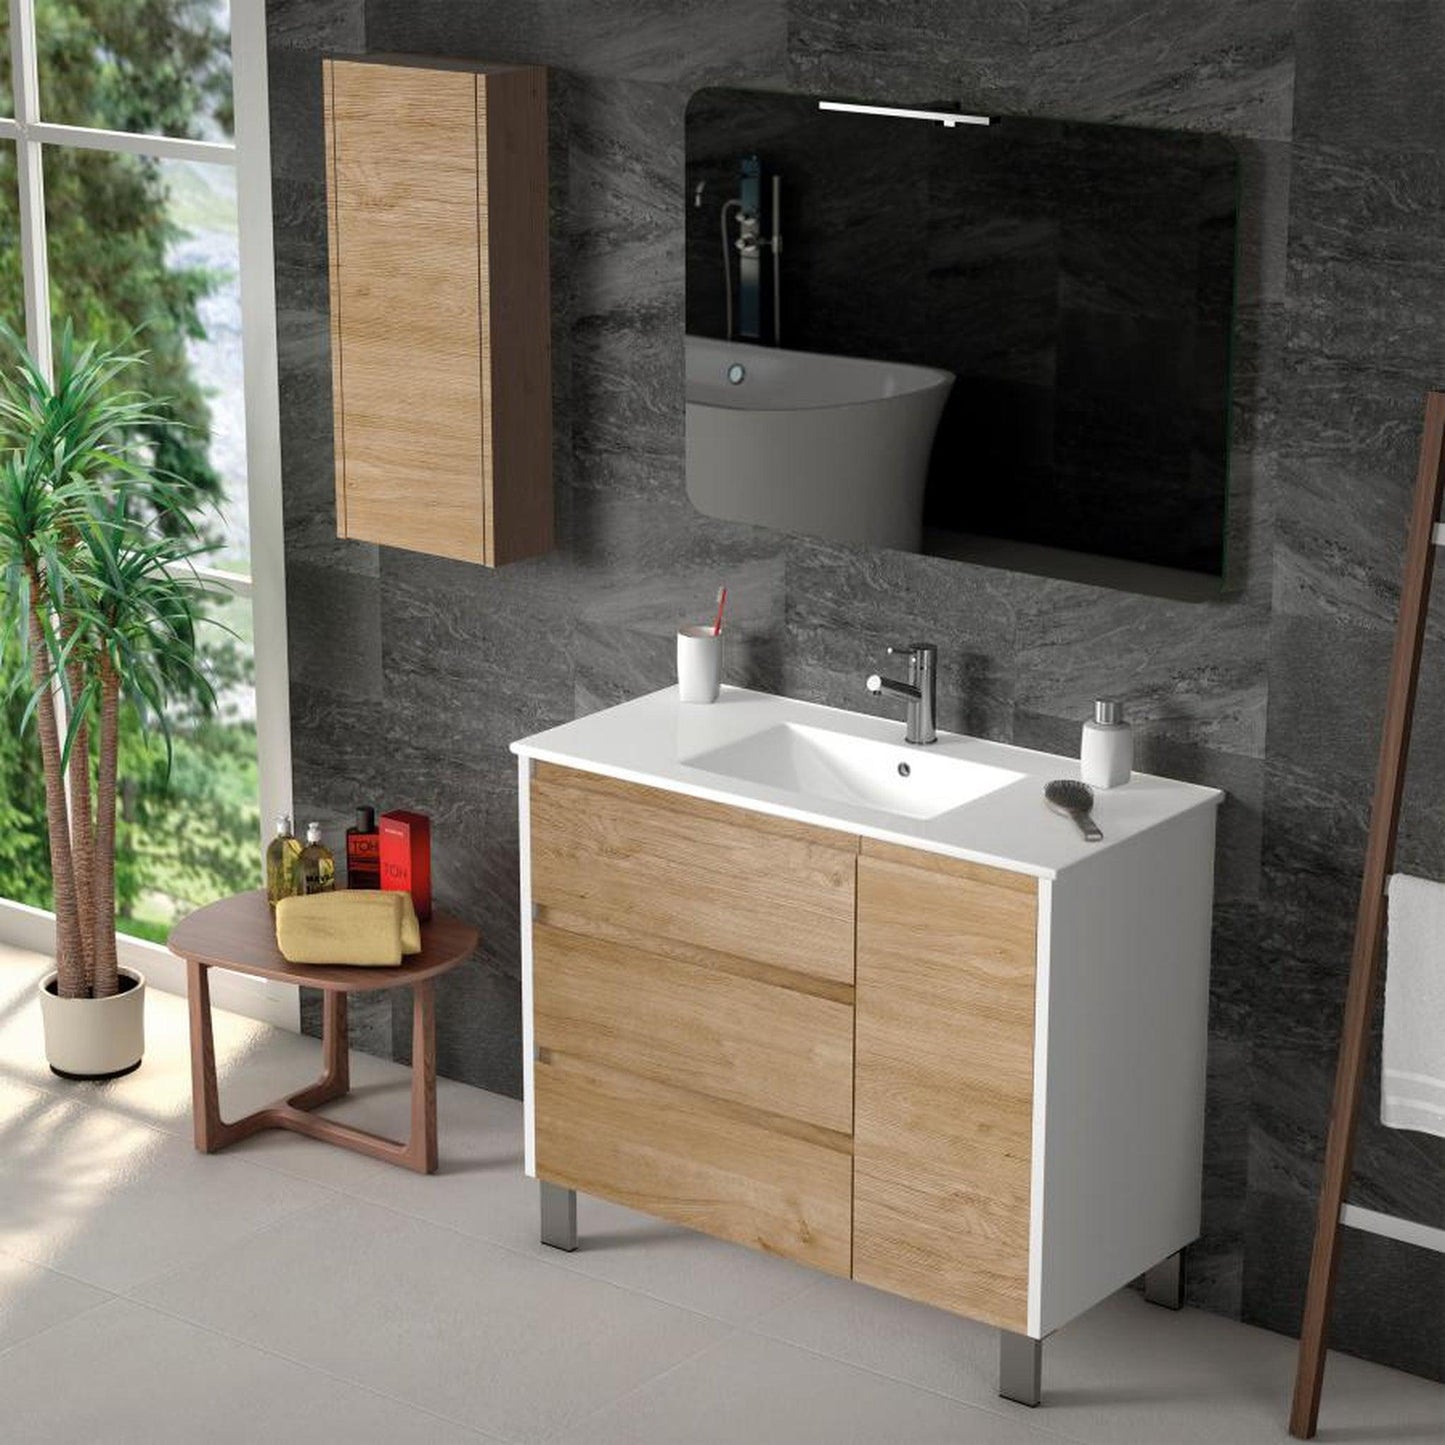 Eviva Bella 39" x 28" White-Oak Freestanding Bathroom Vanity With Integrated Porcelain Sink